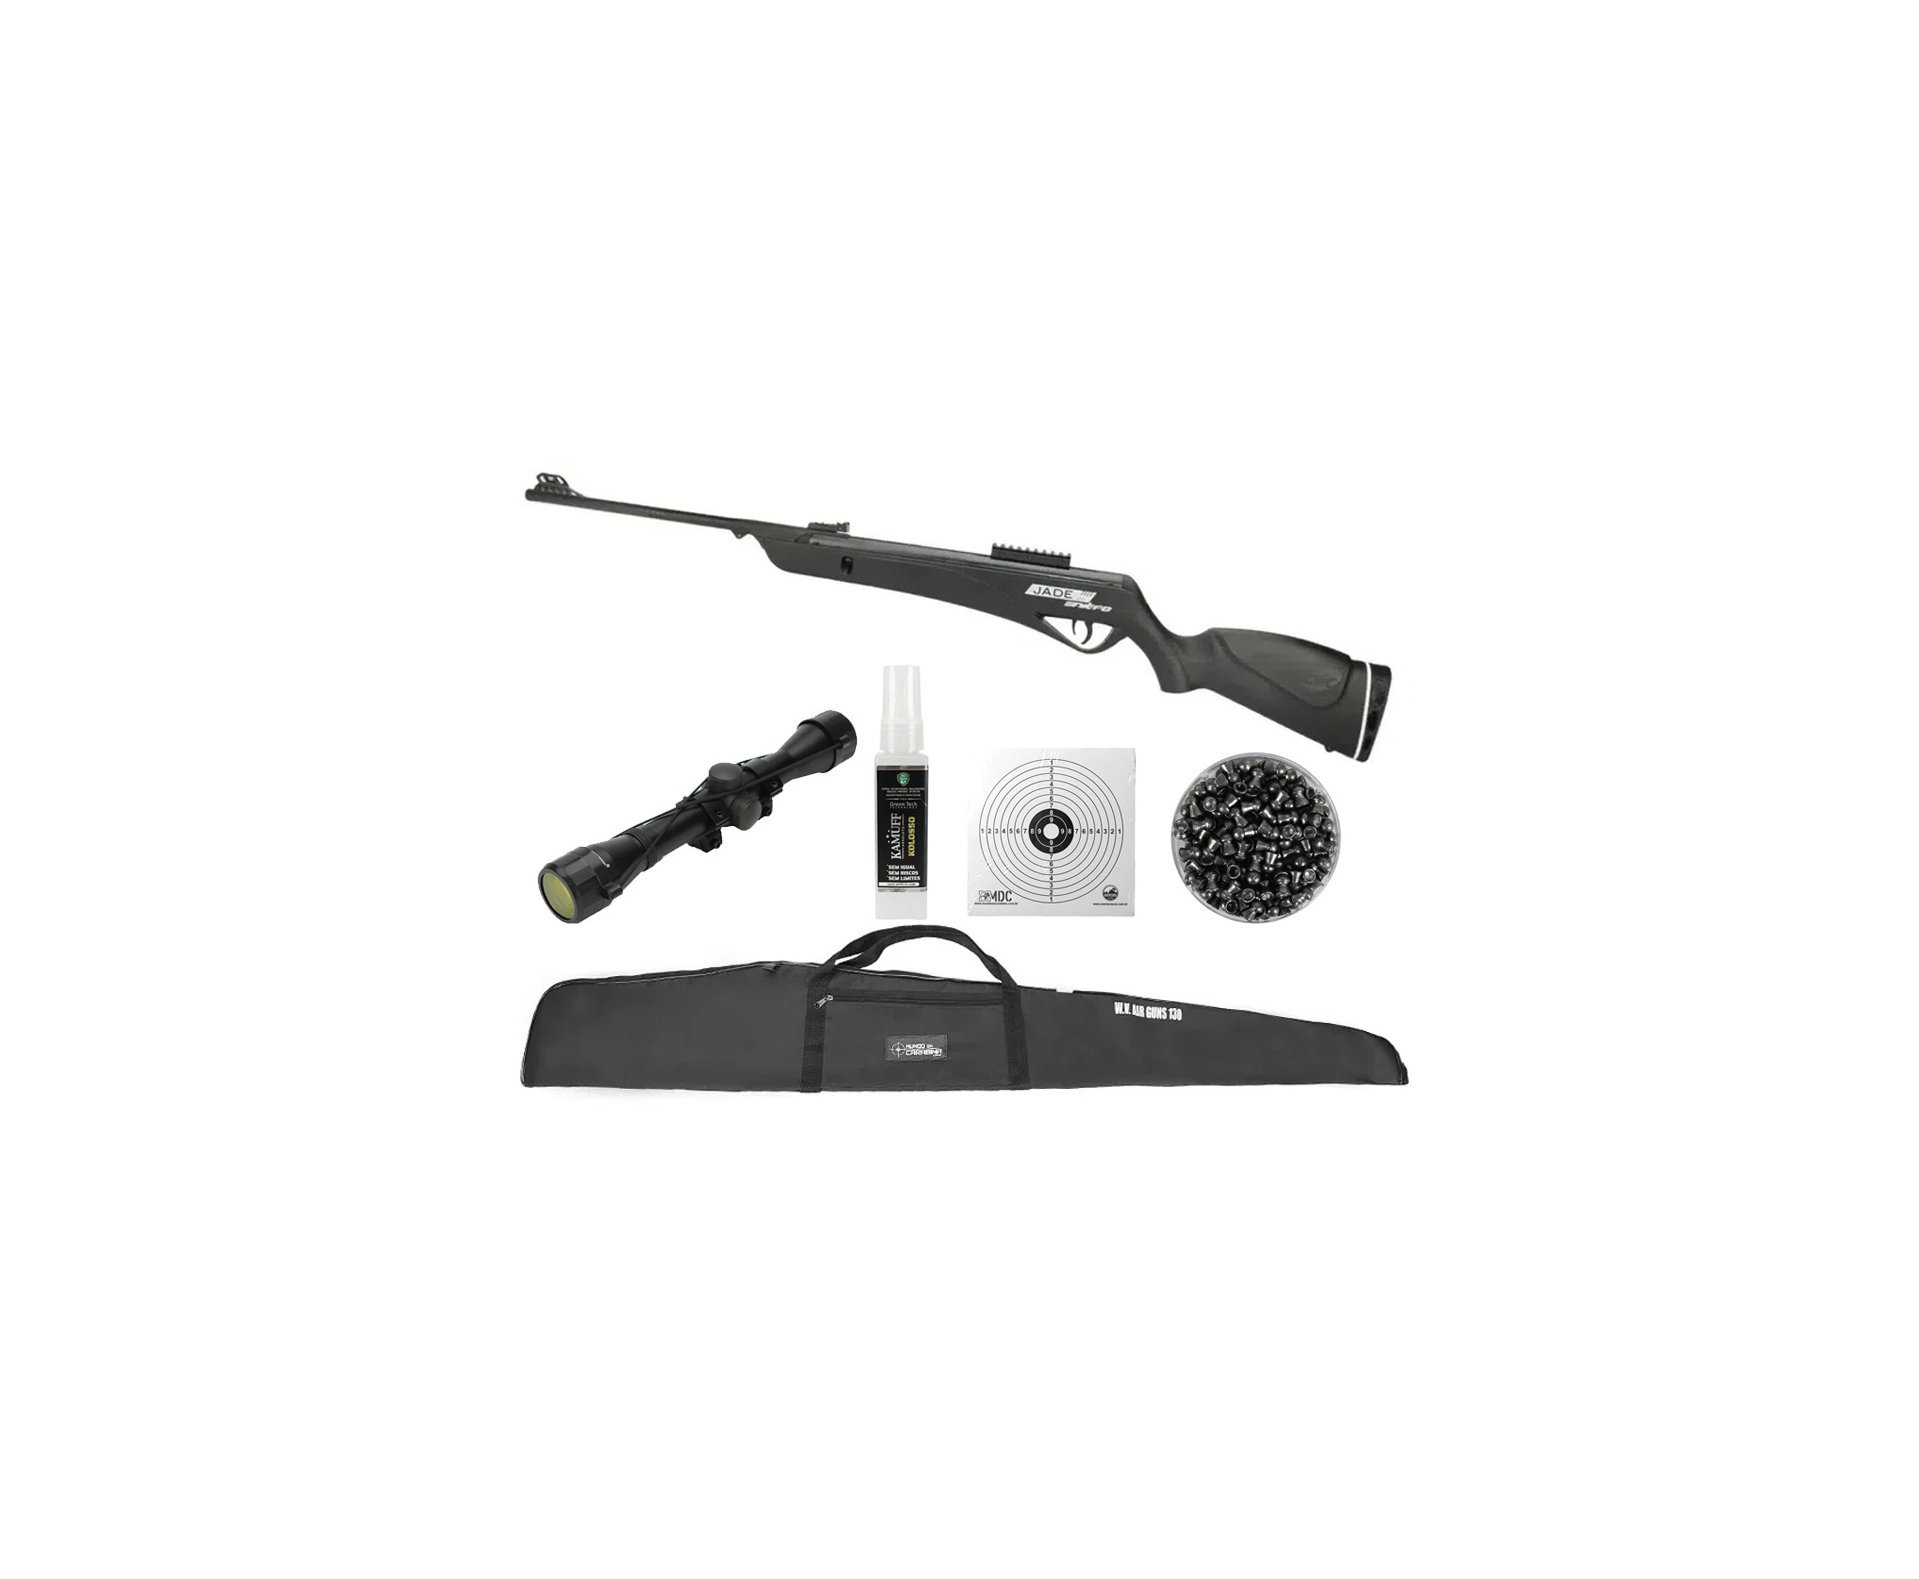 Carabina de Pressão CBC Jade Pro Nitro 6.35mm Preta + Luneta 4x32 + Capa + Chumbinho